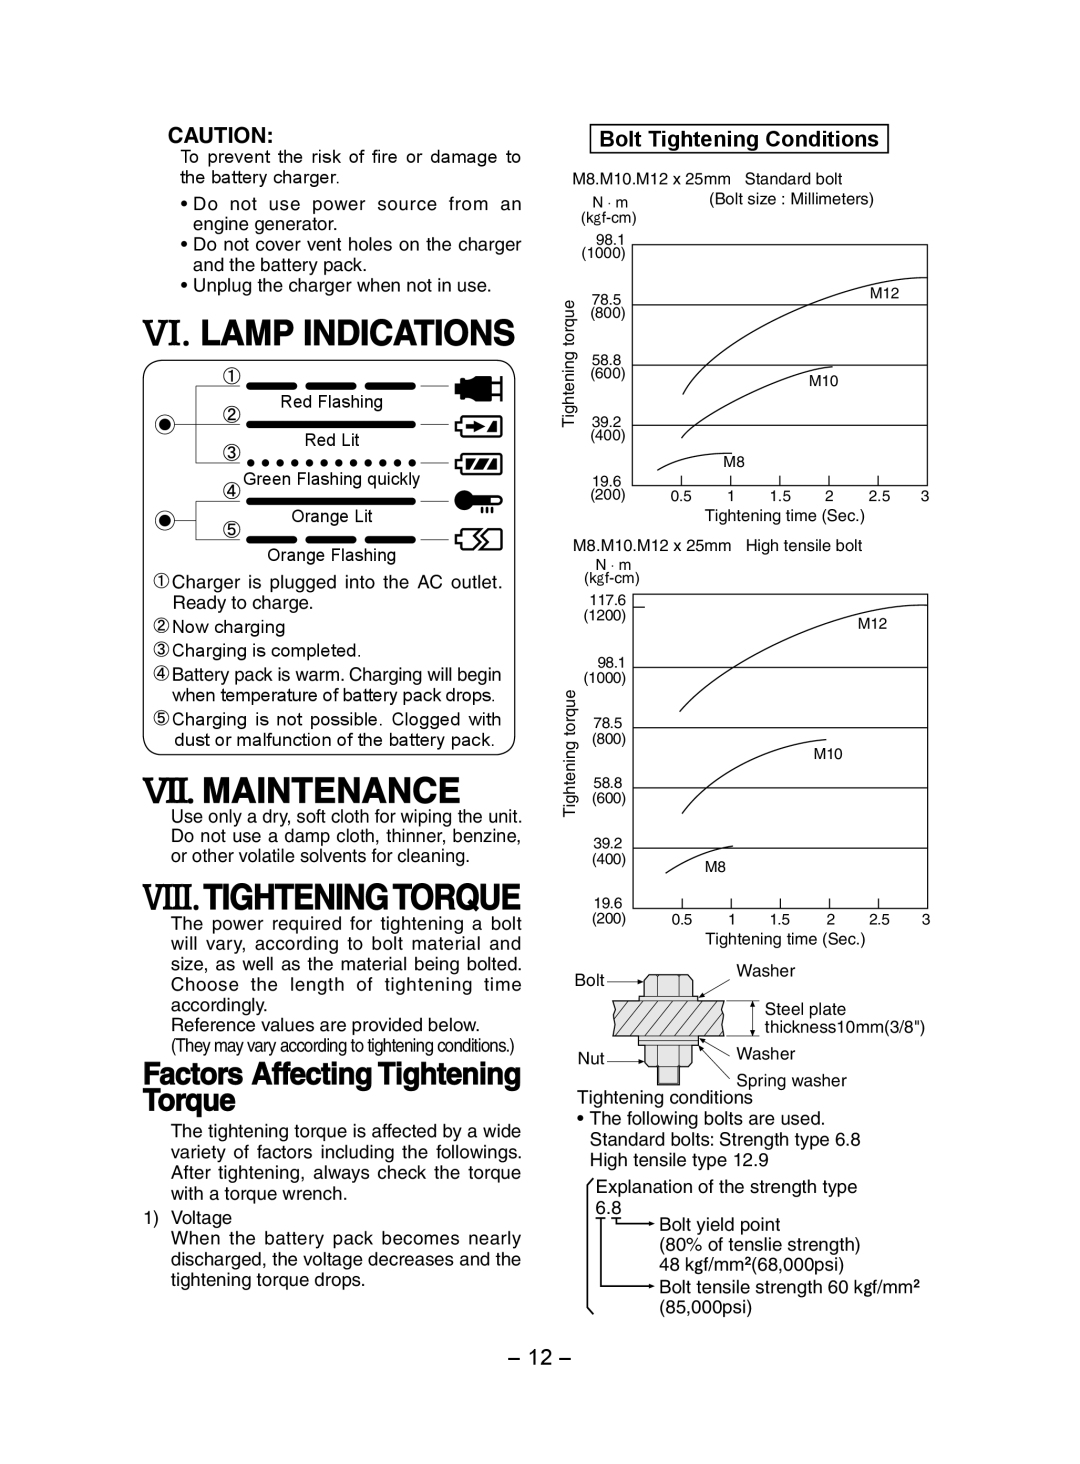 Panasonic EY7202 Vi. Lamp Indications, Vii. Maintenance, Viii.Tighteningtorque, Factors Affecting Tightening Torque 